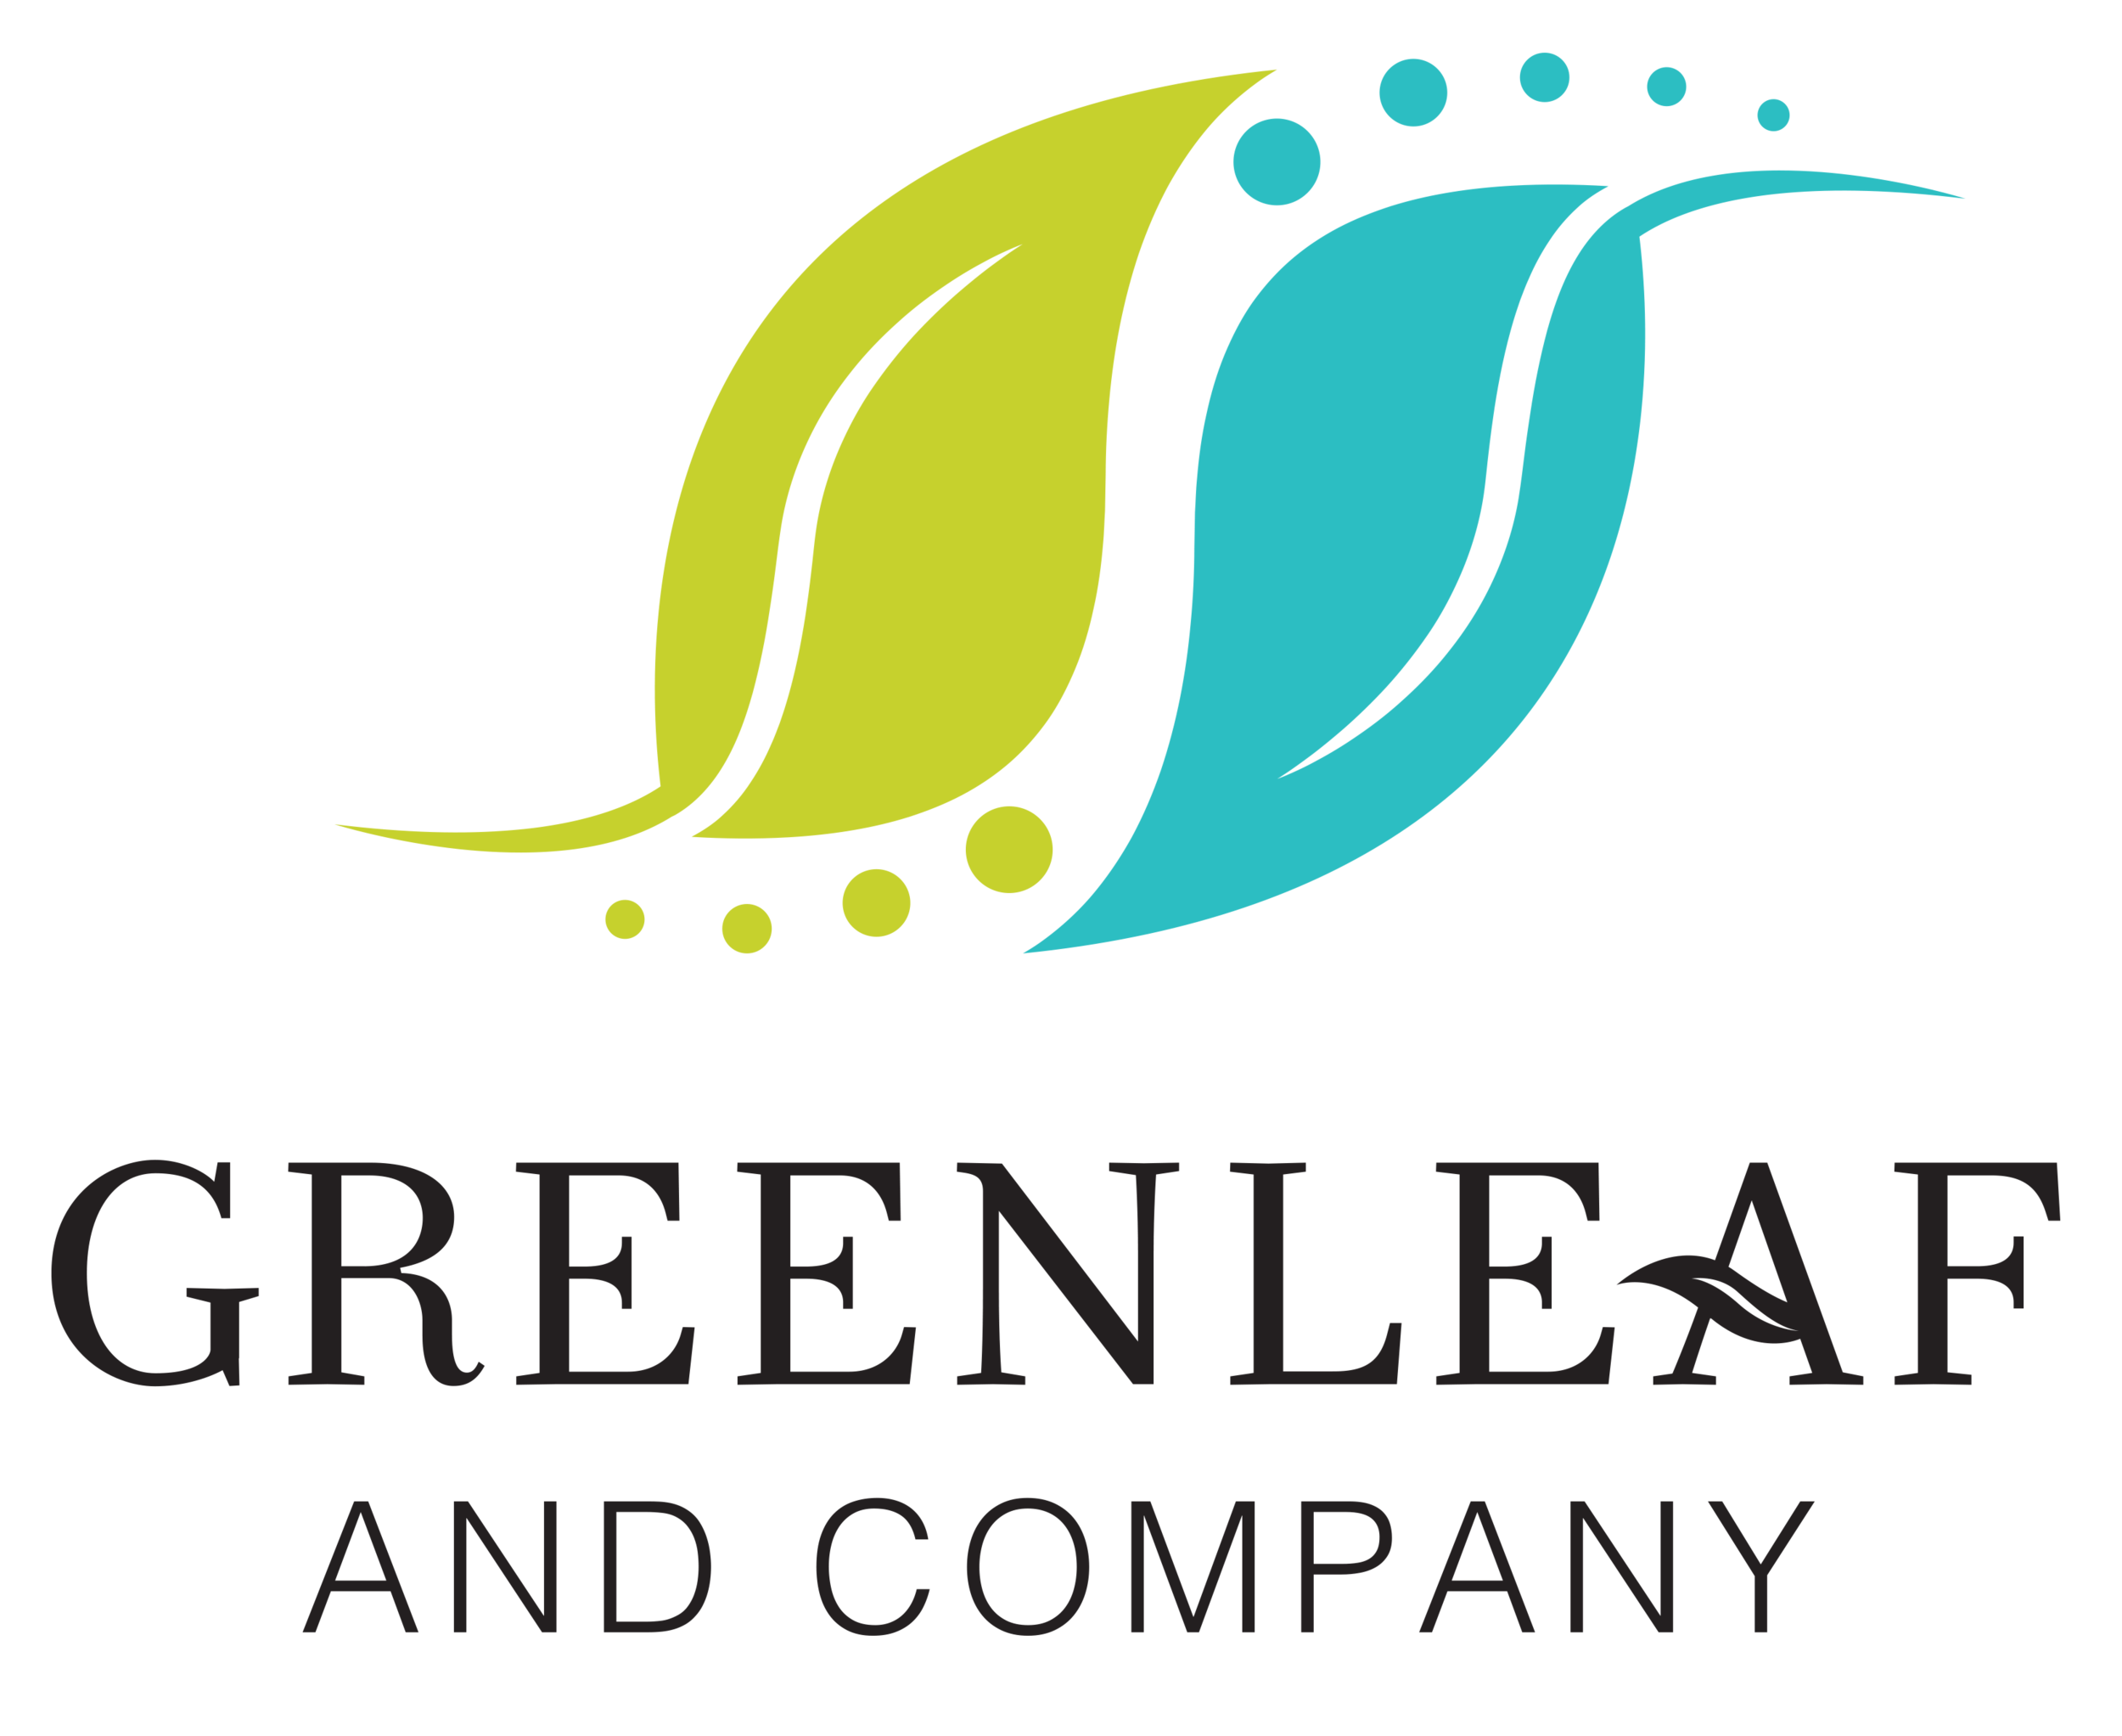 The Green Leaf Company